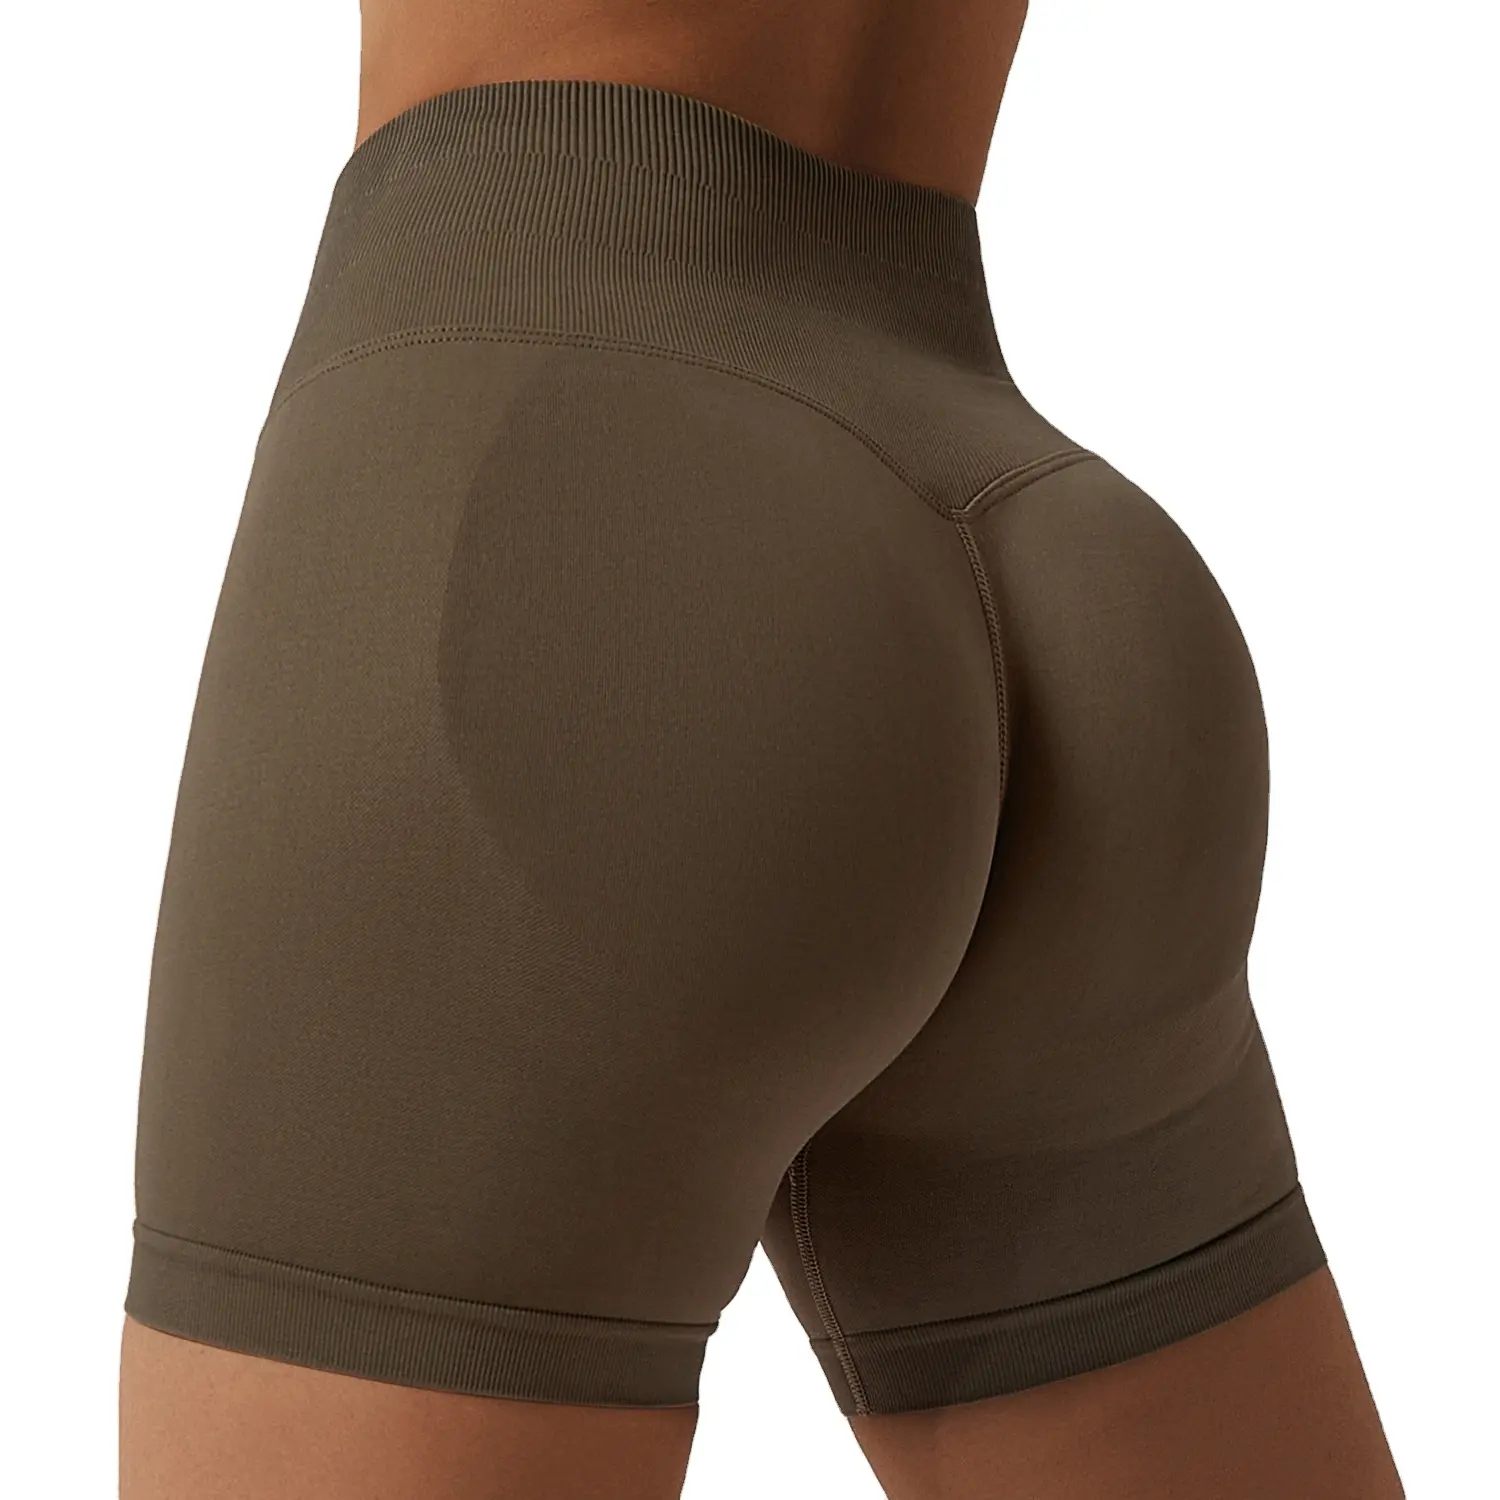 CDK6808 Custom Stretchy Seamless Gym Fitness Short Butt Lift Sports Running Compression High Waist Yoga Nylon Shorts For Women